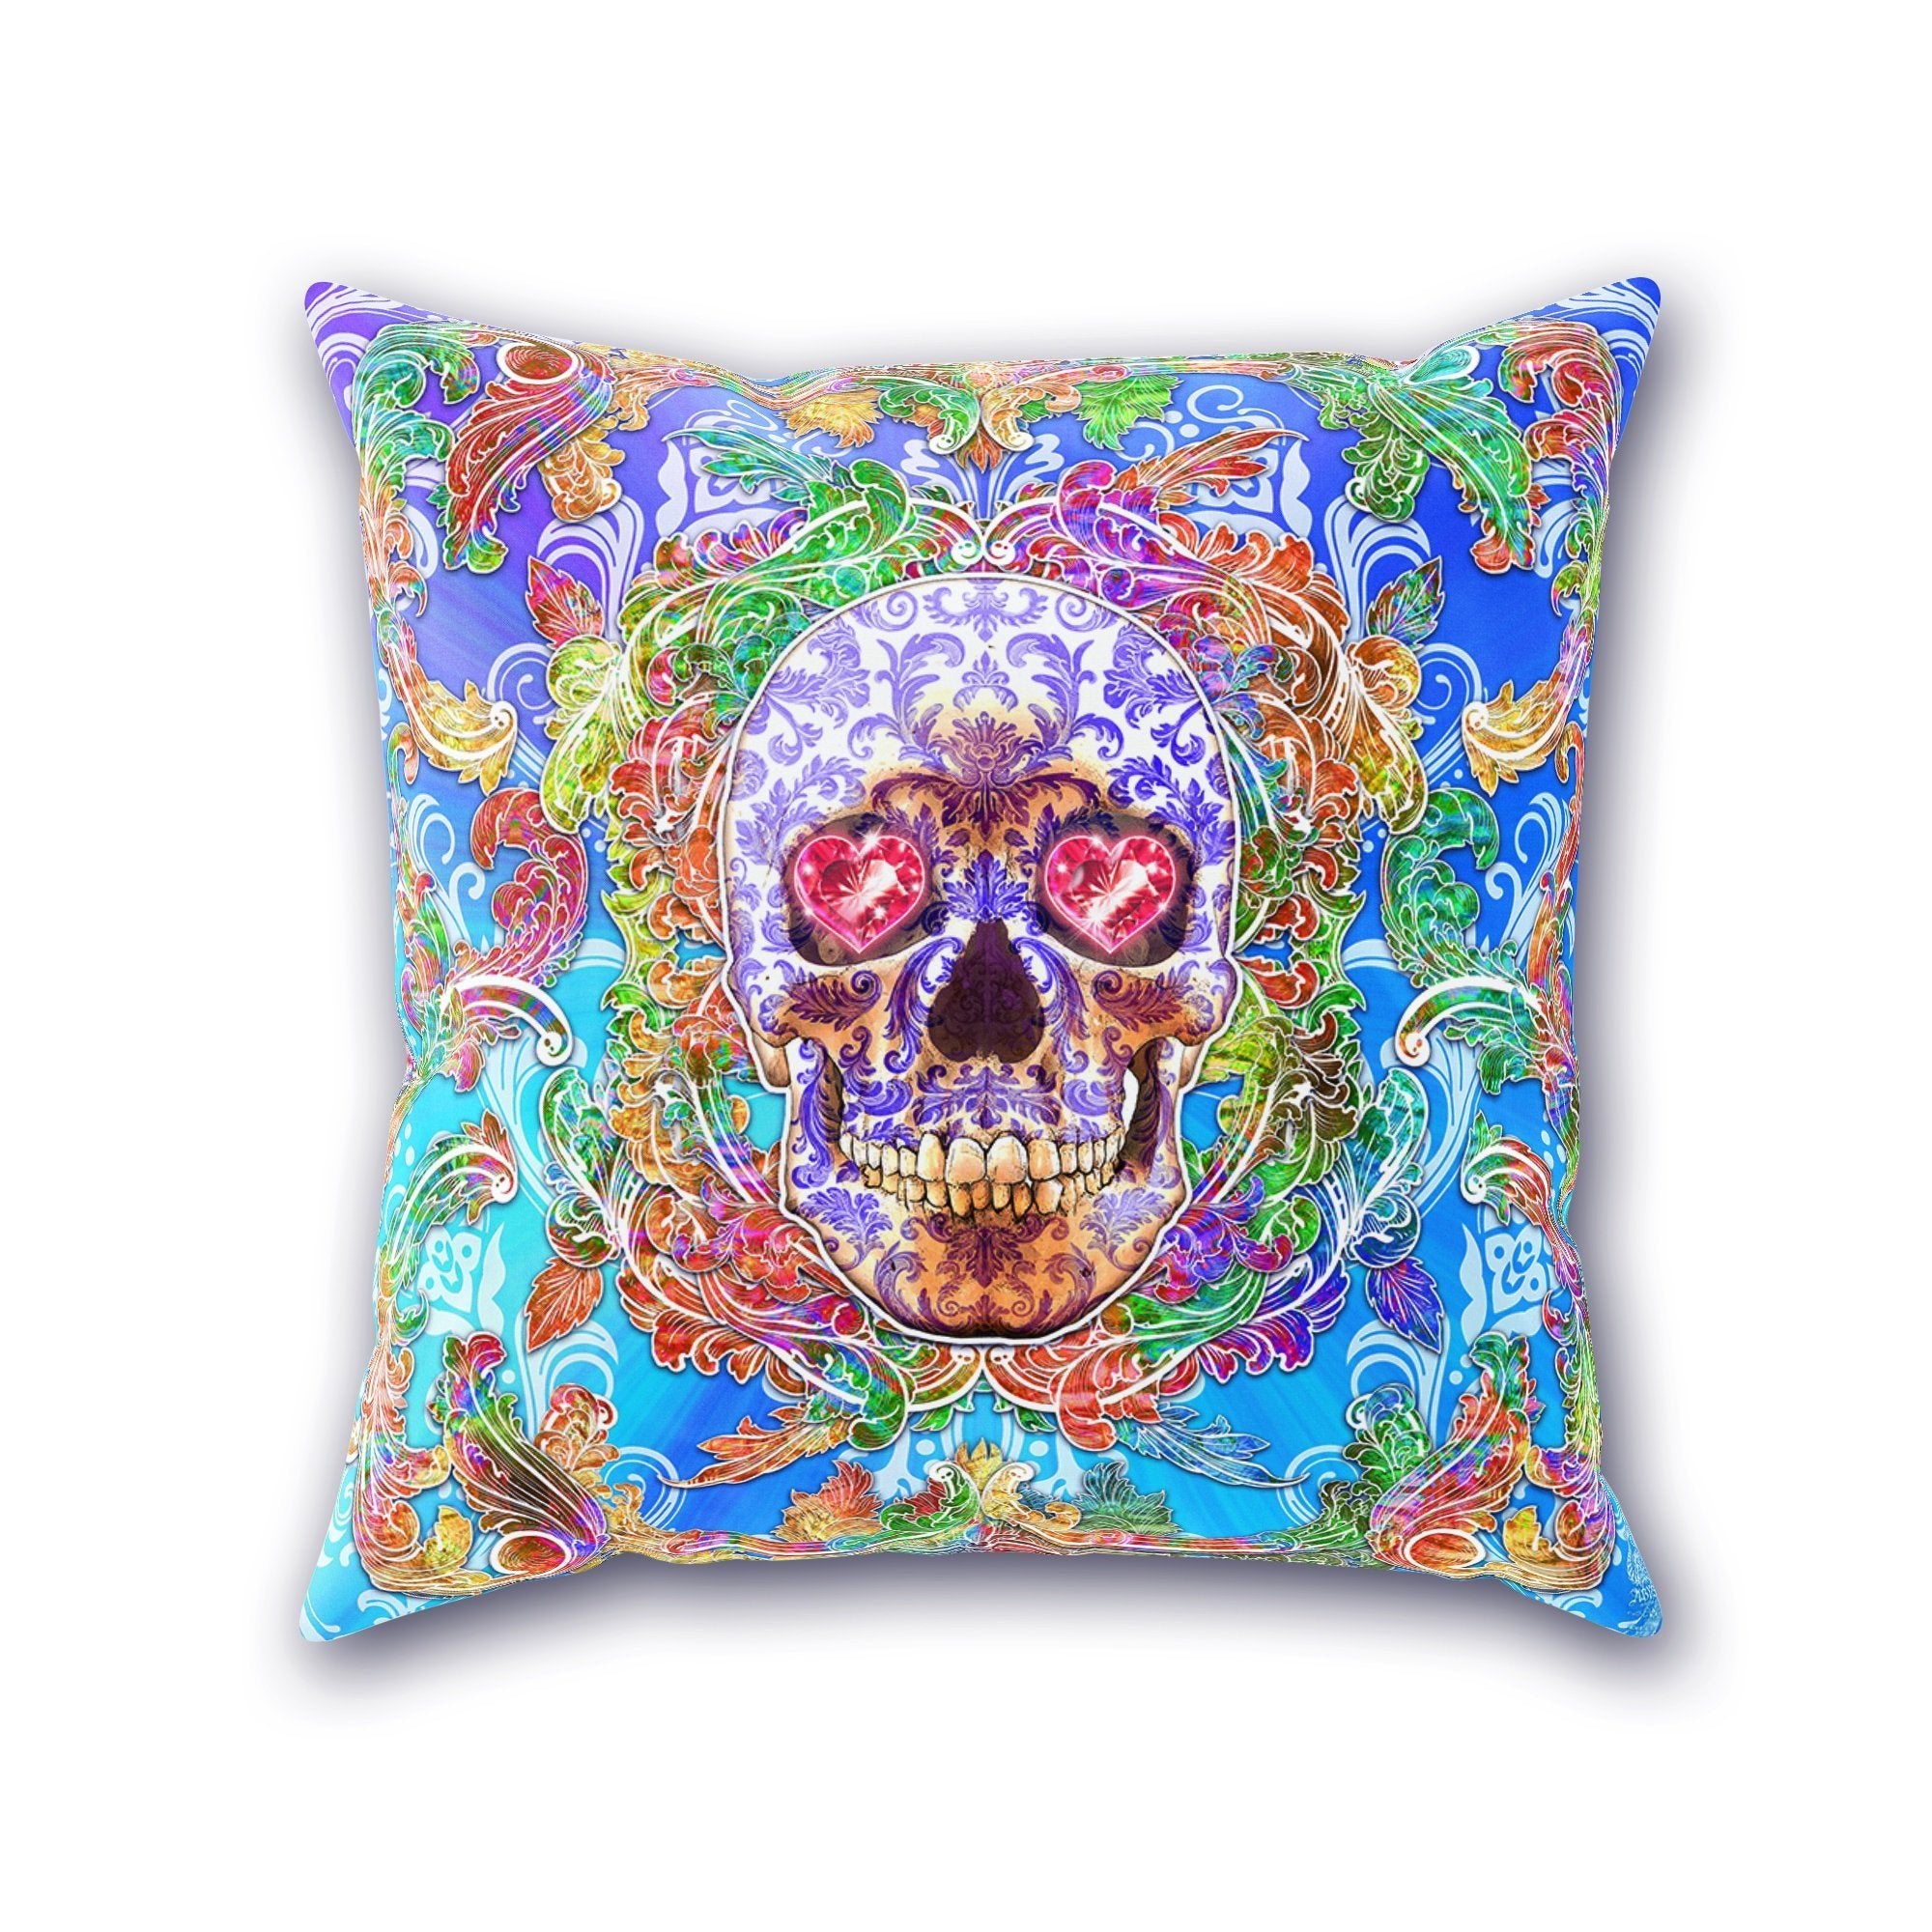 Skull Throw Pillow, Decorative Accent Cushion, Festive Home Decor, Macabre Art - Psy Purple - Abysm Internal